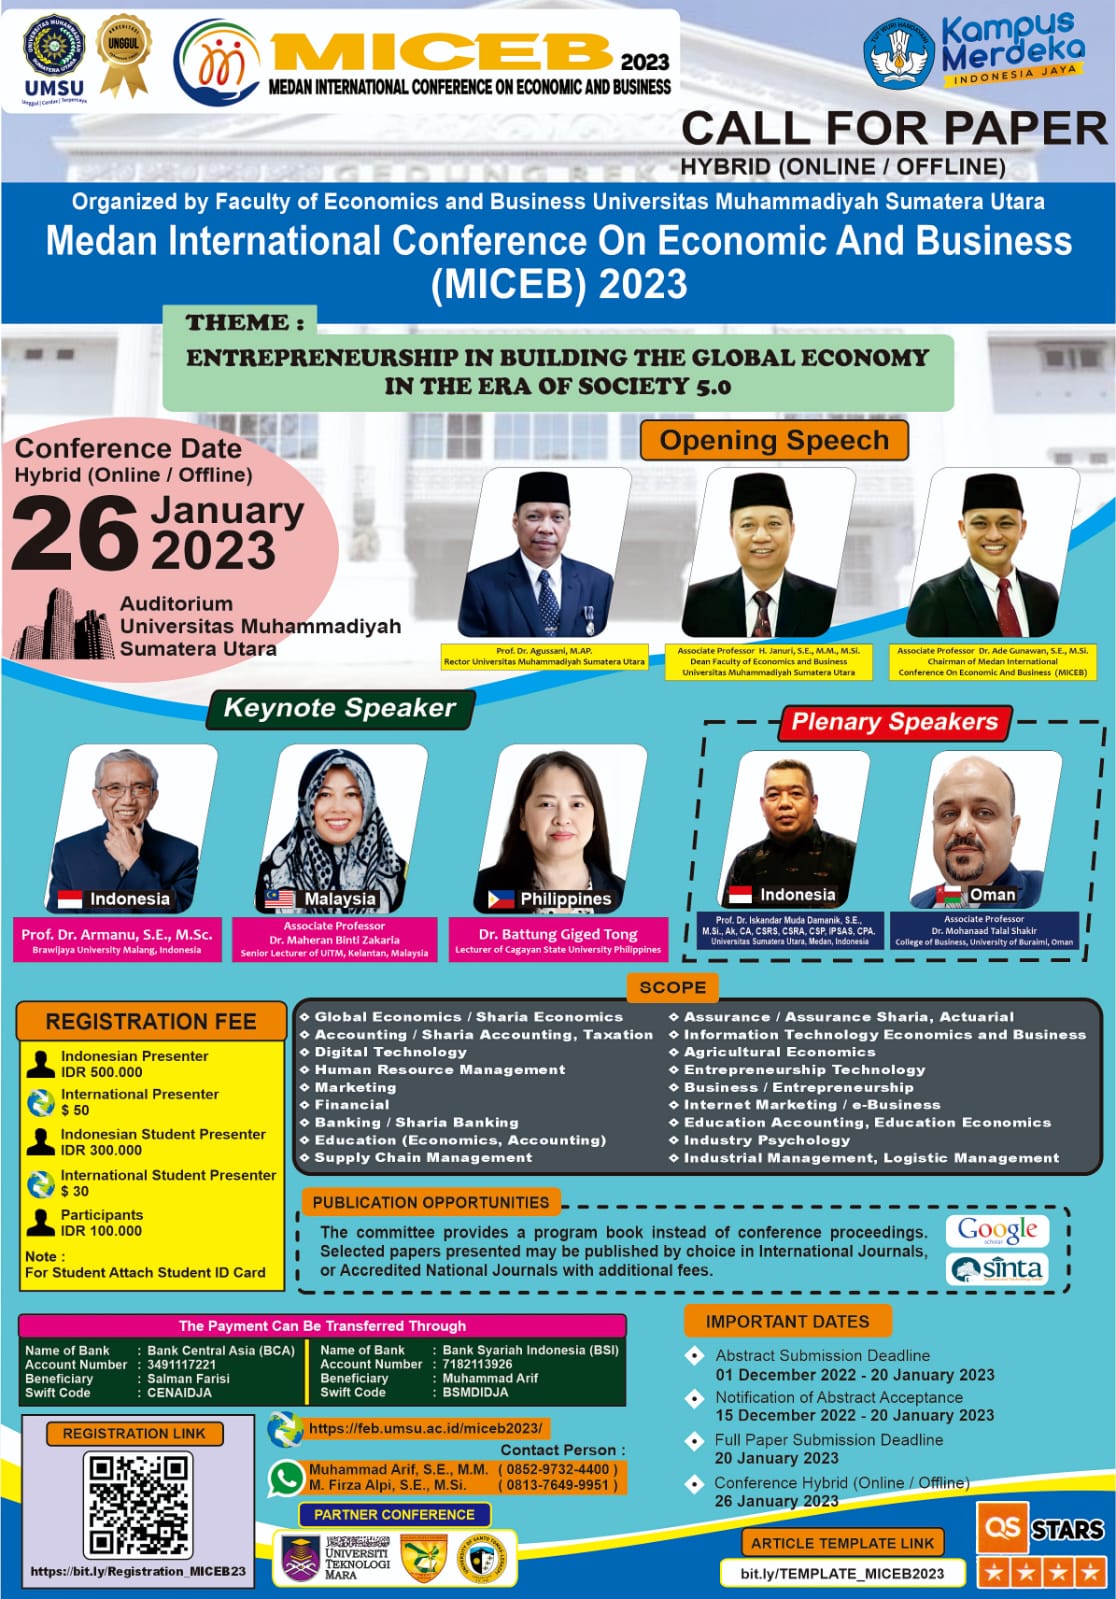 Medan International Conference on Economics and Business (MICEB) Faculty Economics and Business Universitas Muhammadiyah Sumatera Utara, Medan, Indonesia